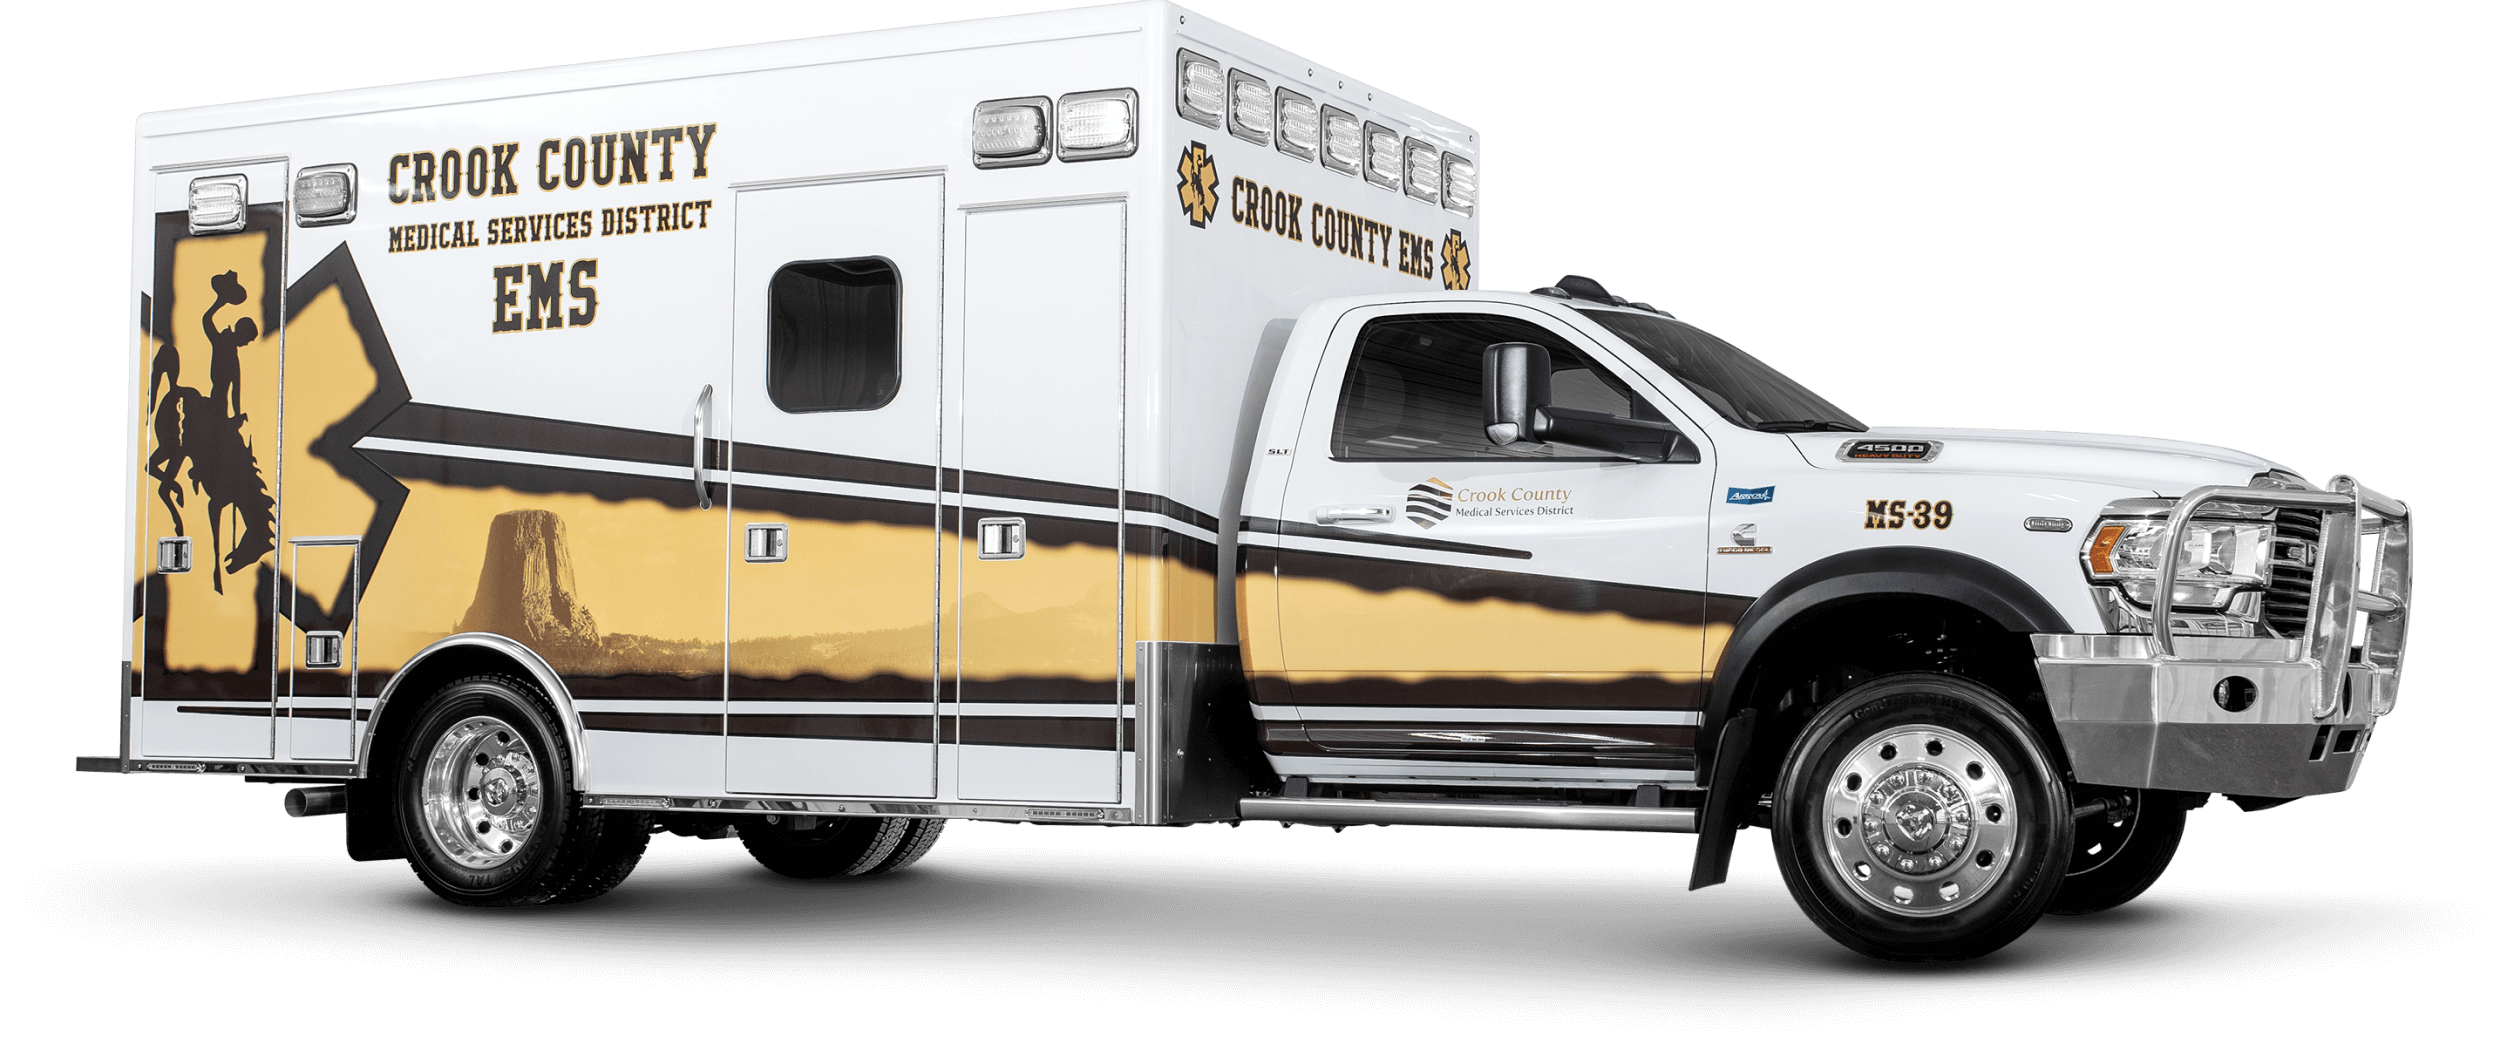 Passenger Side View of Crook County Ambulance